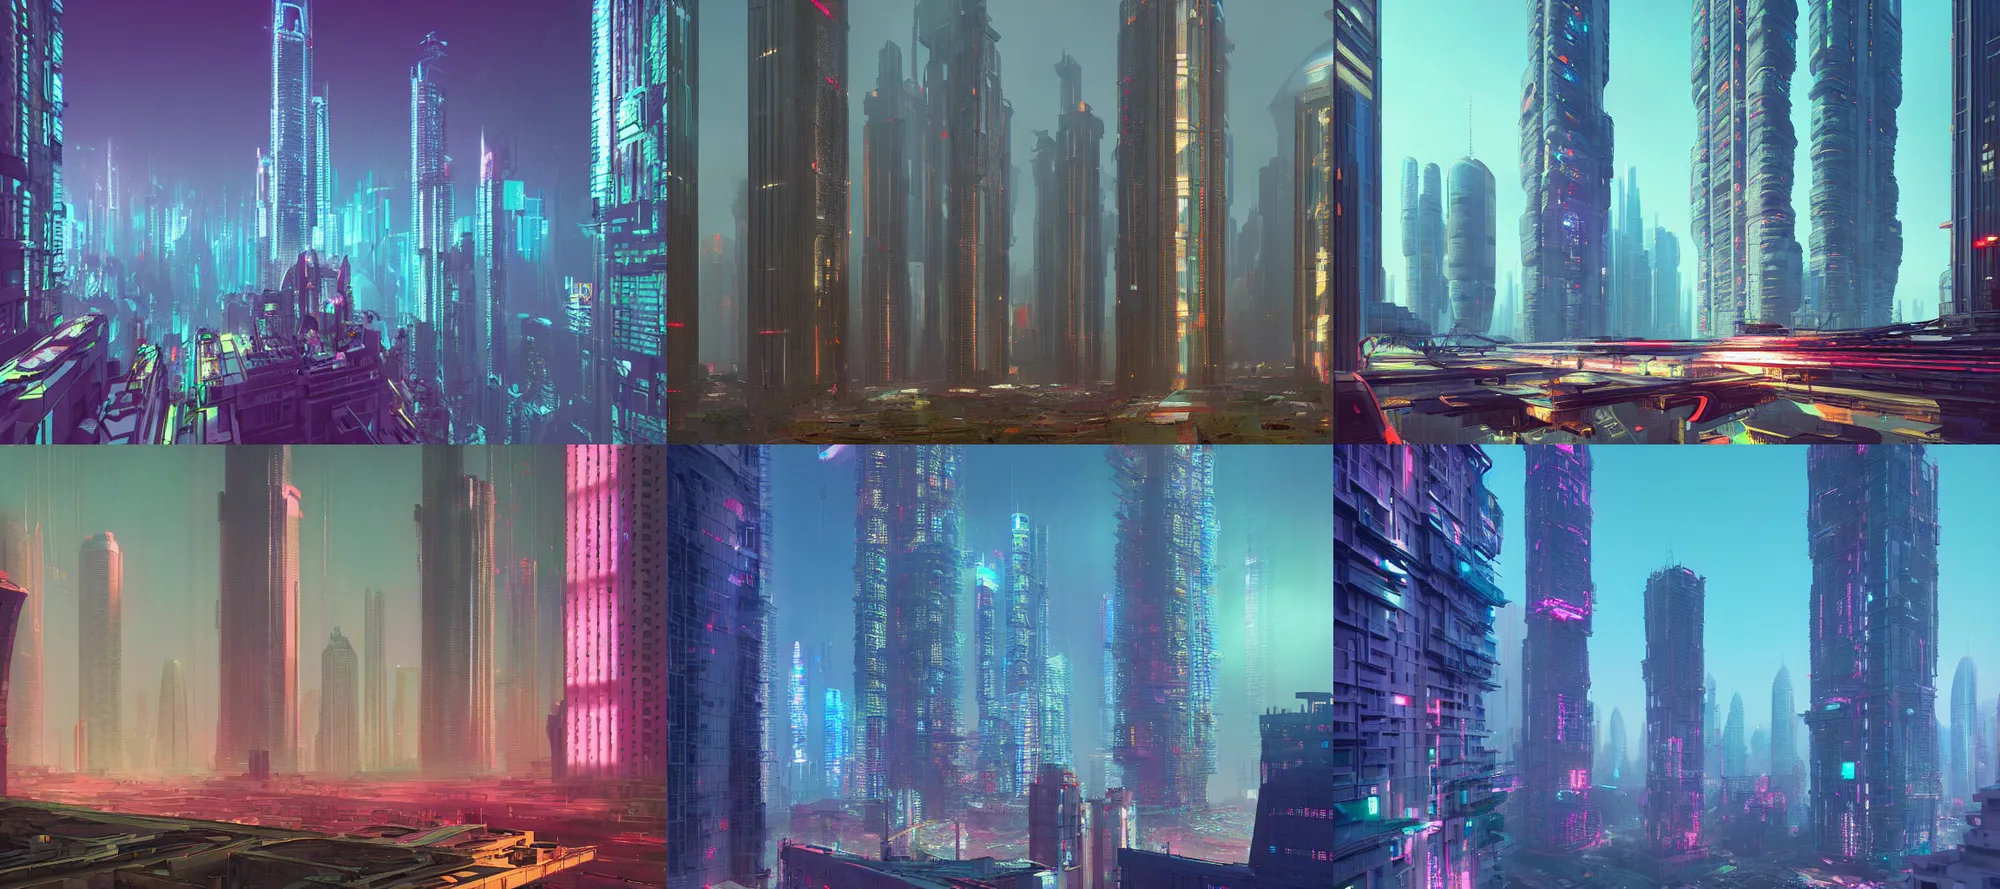 Prompt: a futuristic Shenzen Chongqing Kowloon high-rise cityscape rendered by beeple makoto shinkai syd mead simon stalenhag environment concept digital art unreal